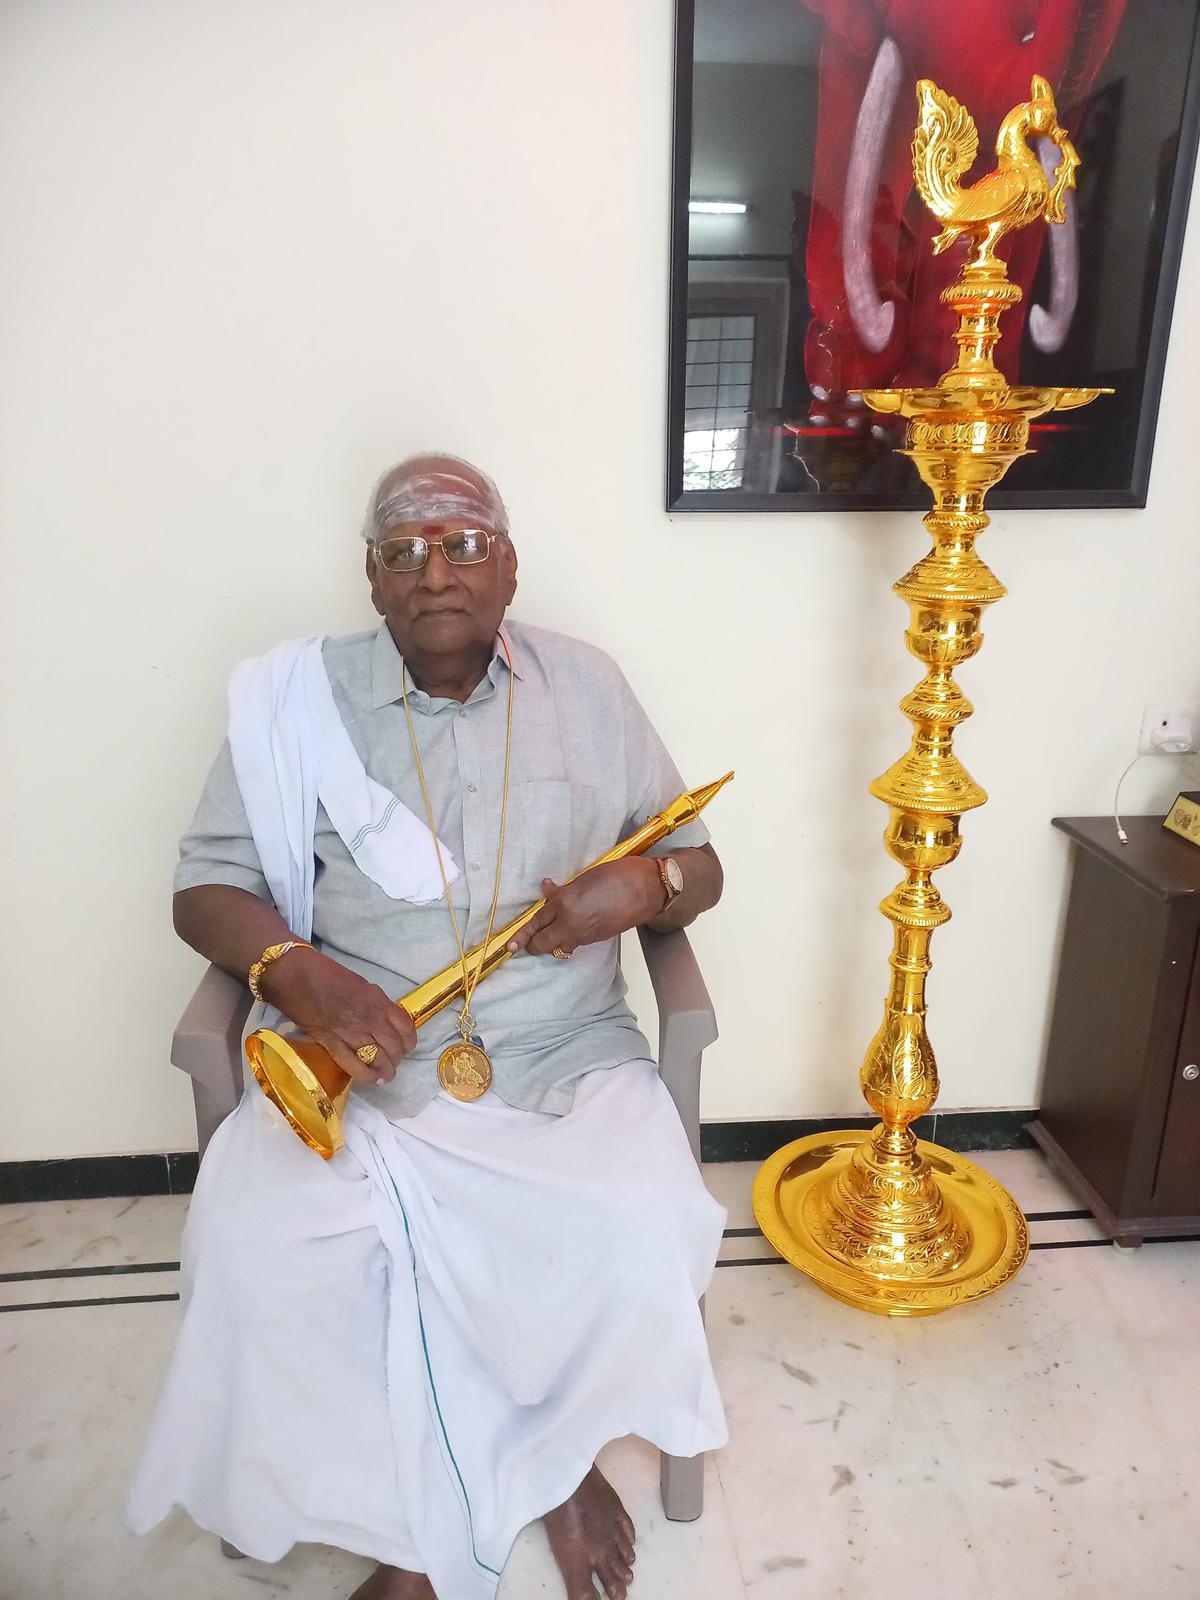 Rajanna with the gold-plated nagaswaram and kuthuvilakku